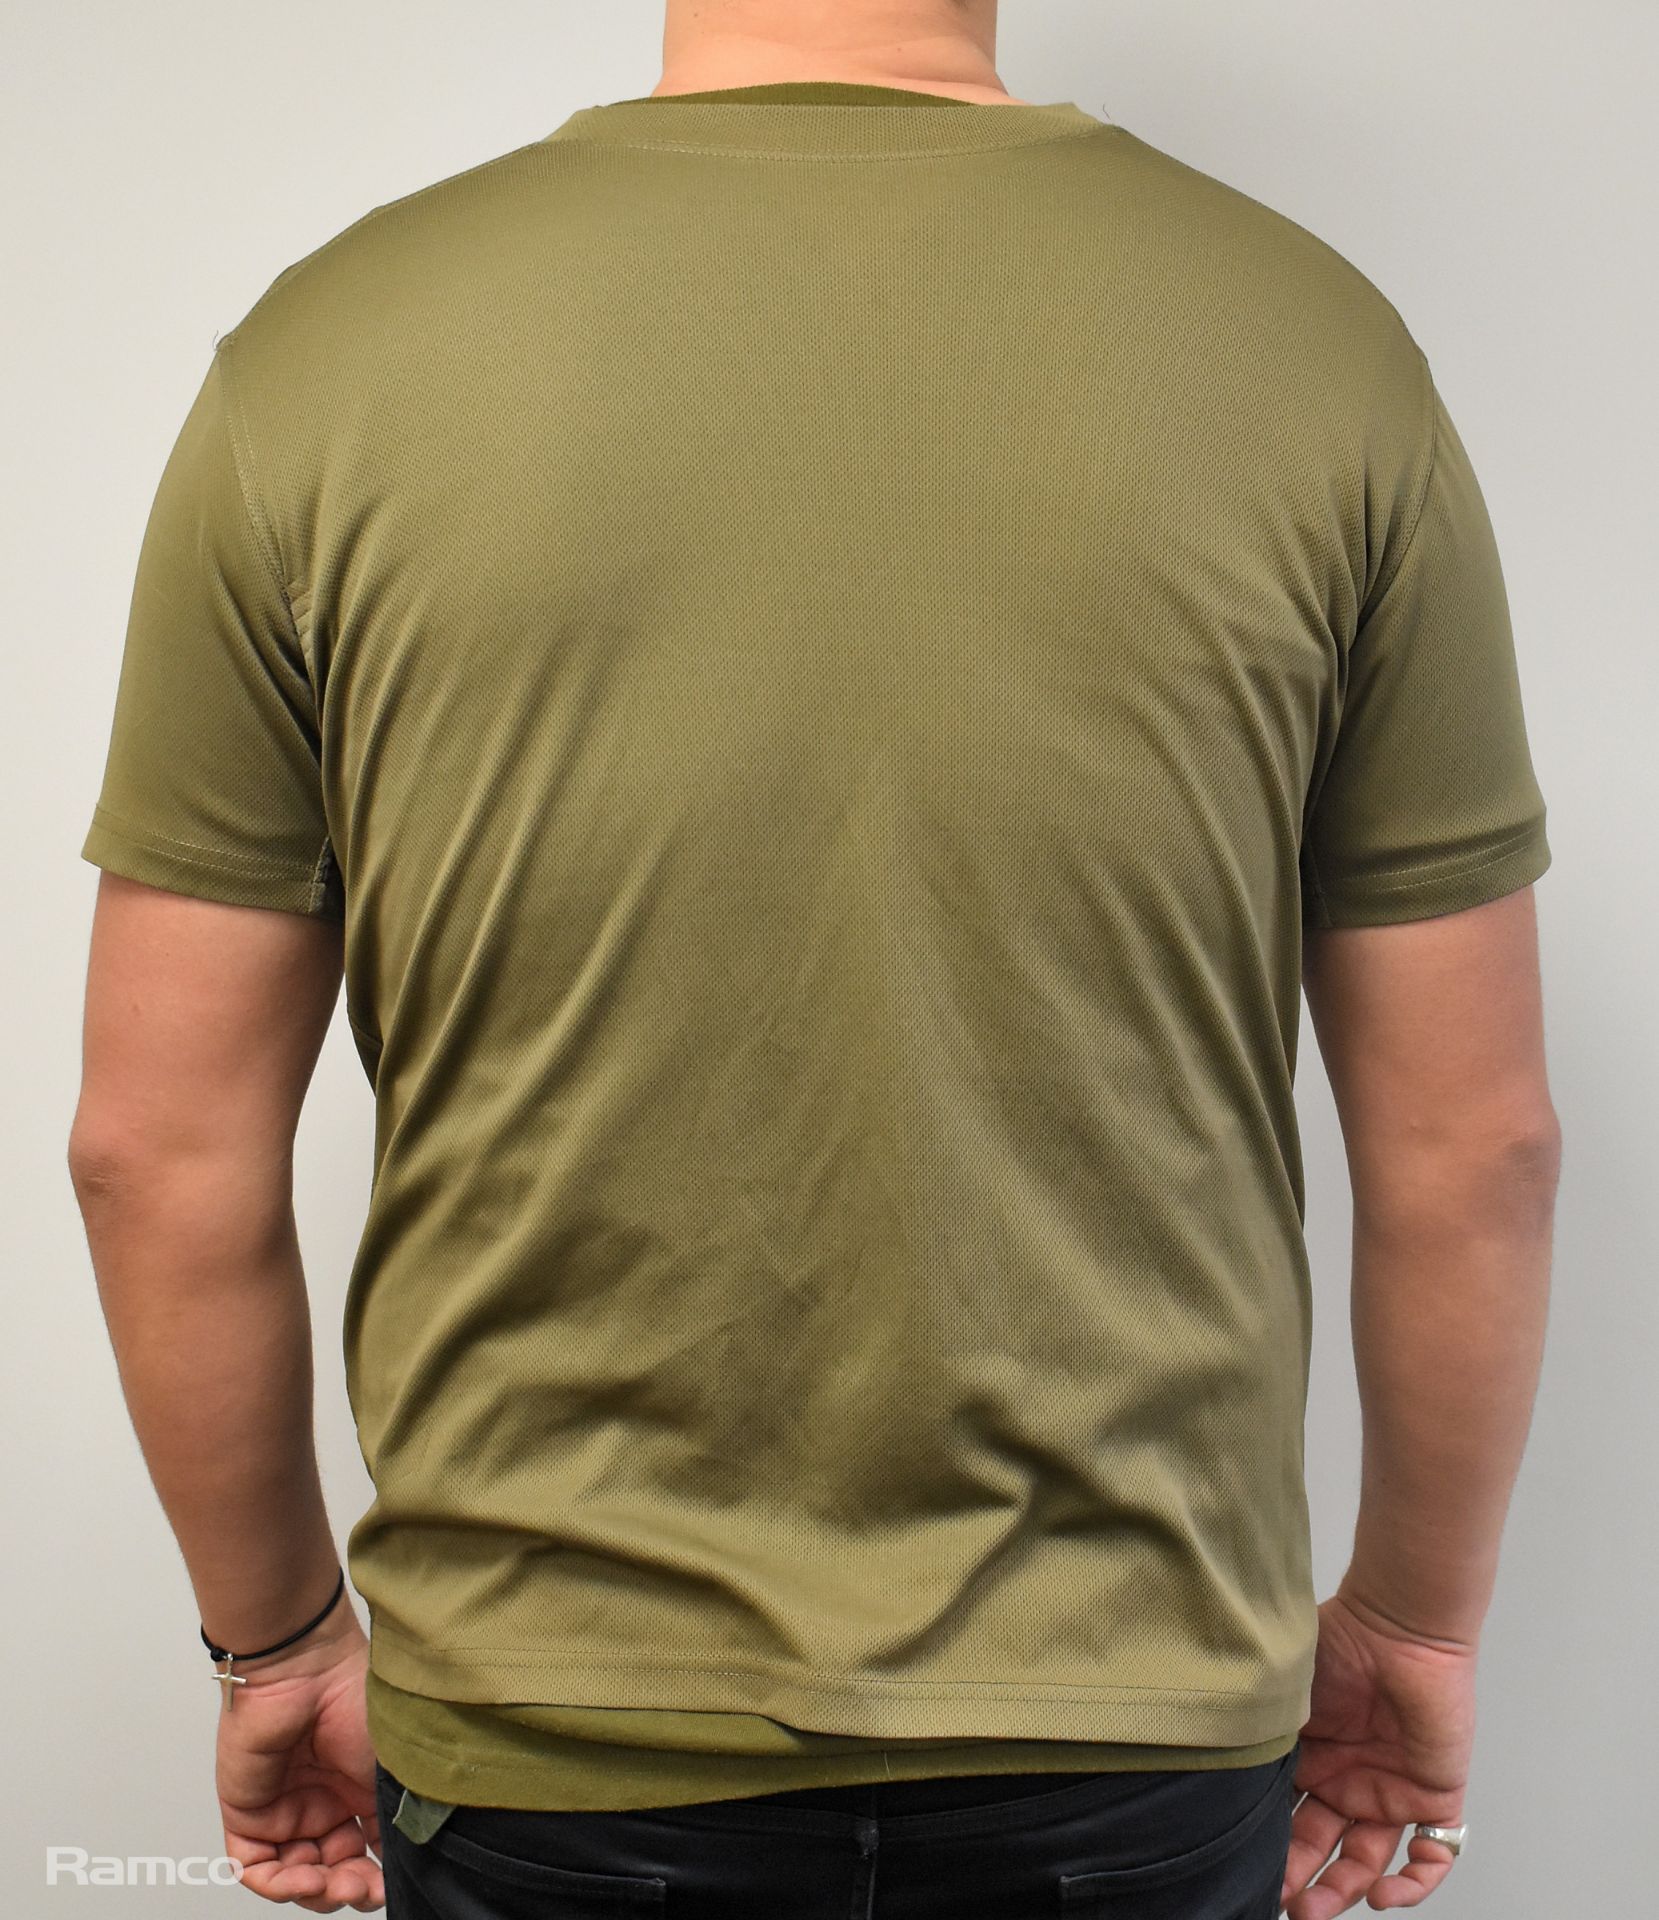 50x British Army combat T-shirts anti static - mixed grades and sizes - Image 3 of 12